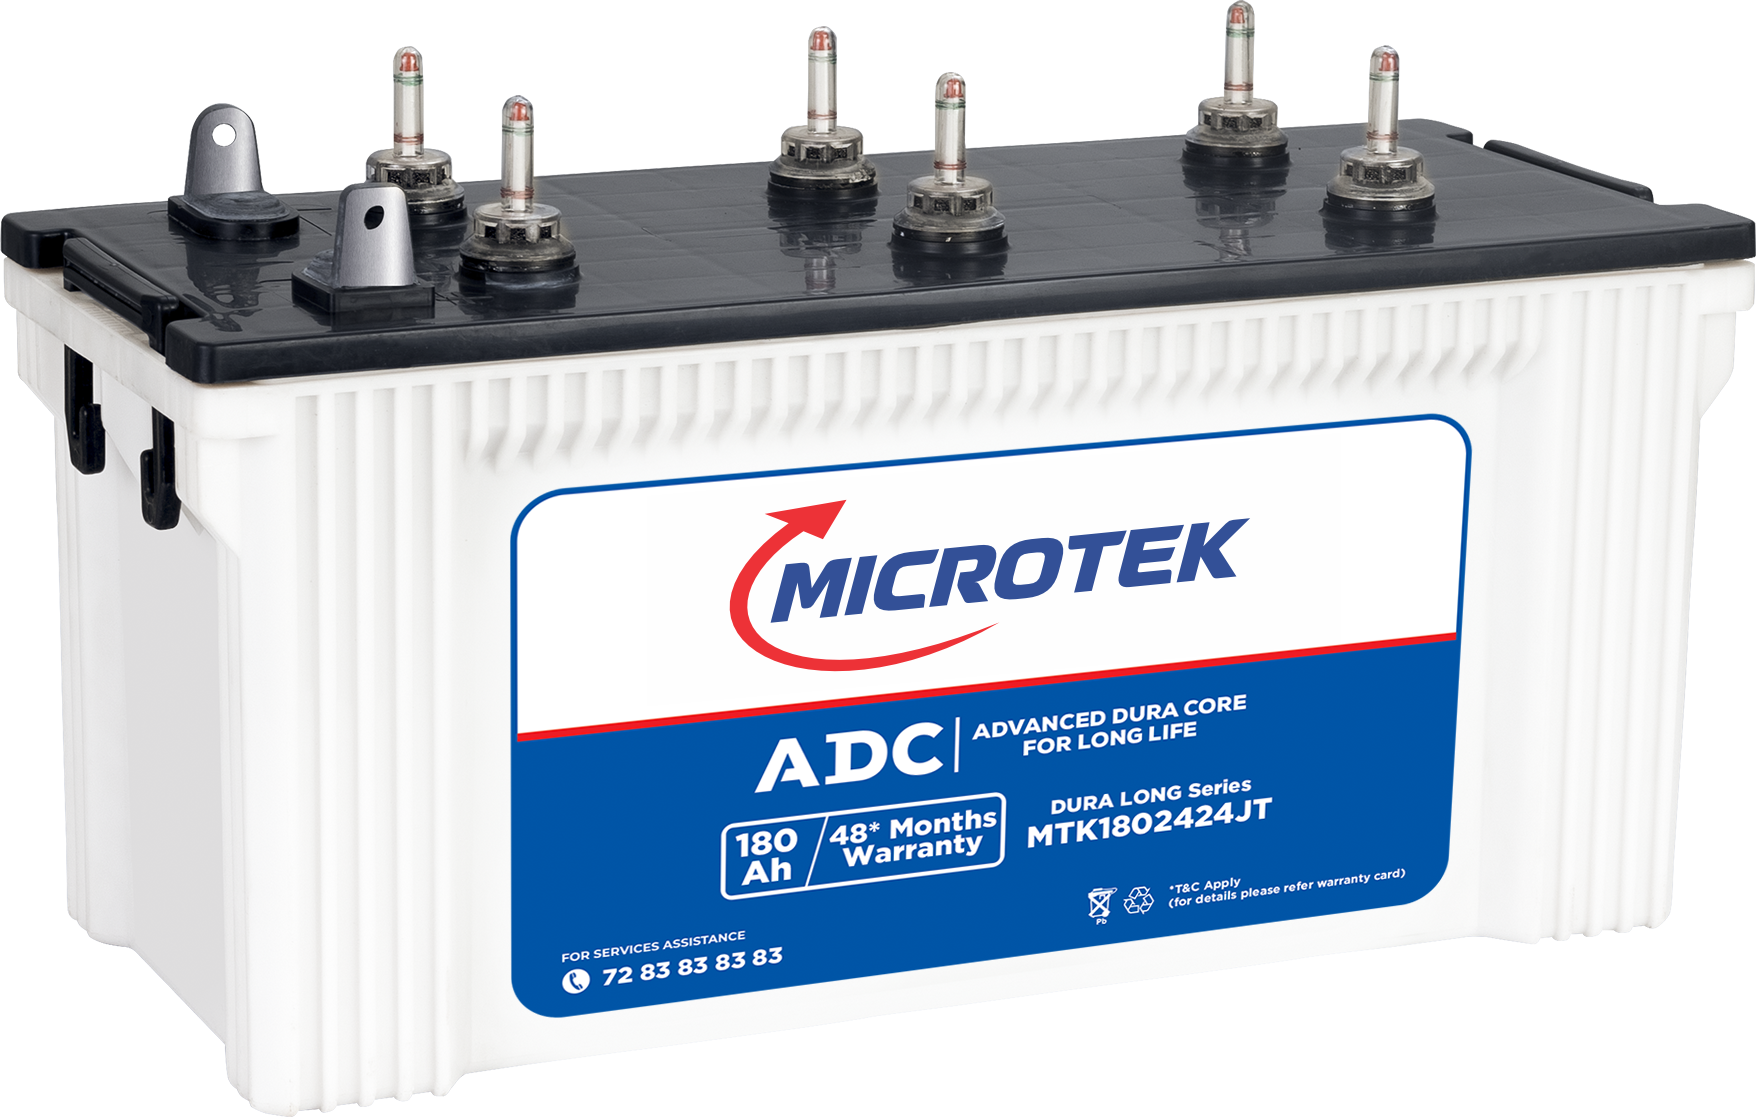  Microtek Dura Long MTK1802424JT 180Ah/12V Inverter Battery With Advanced Dura Core Technology